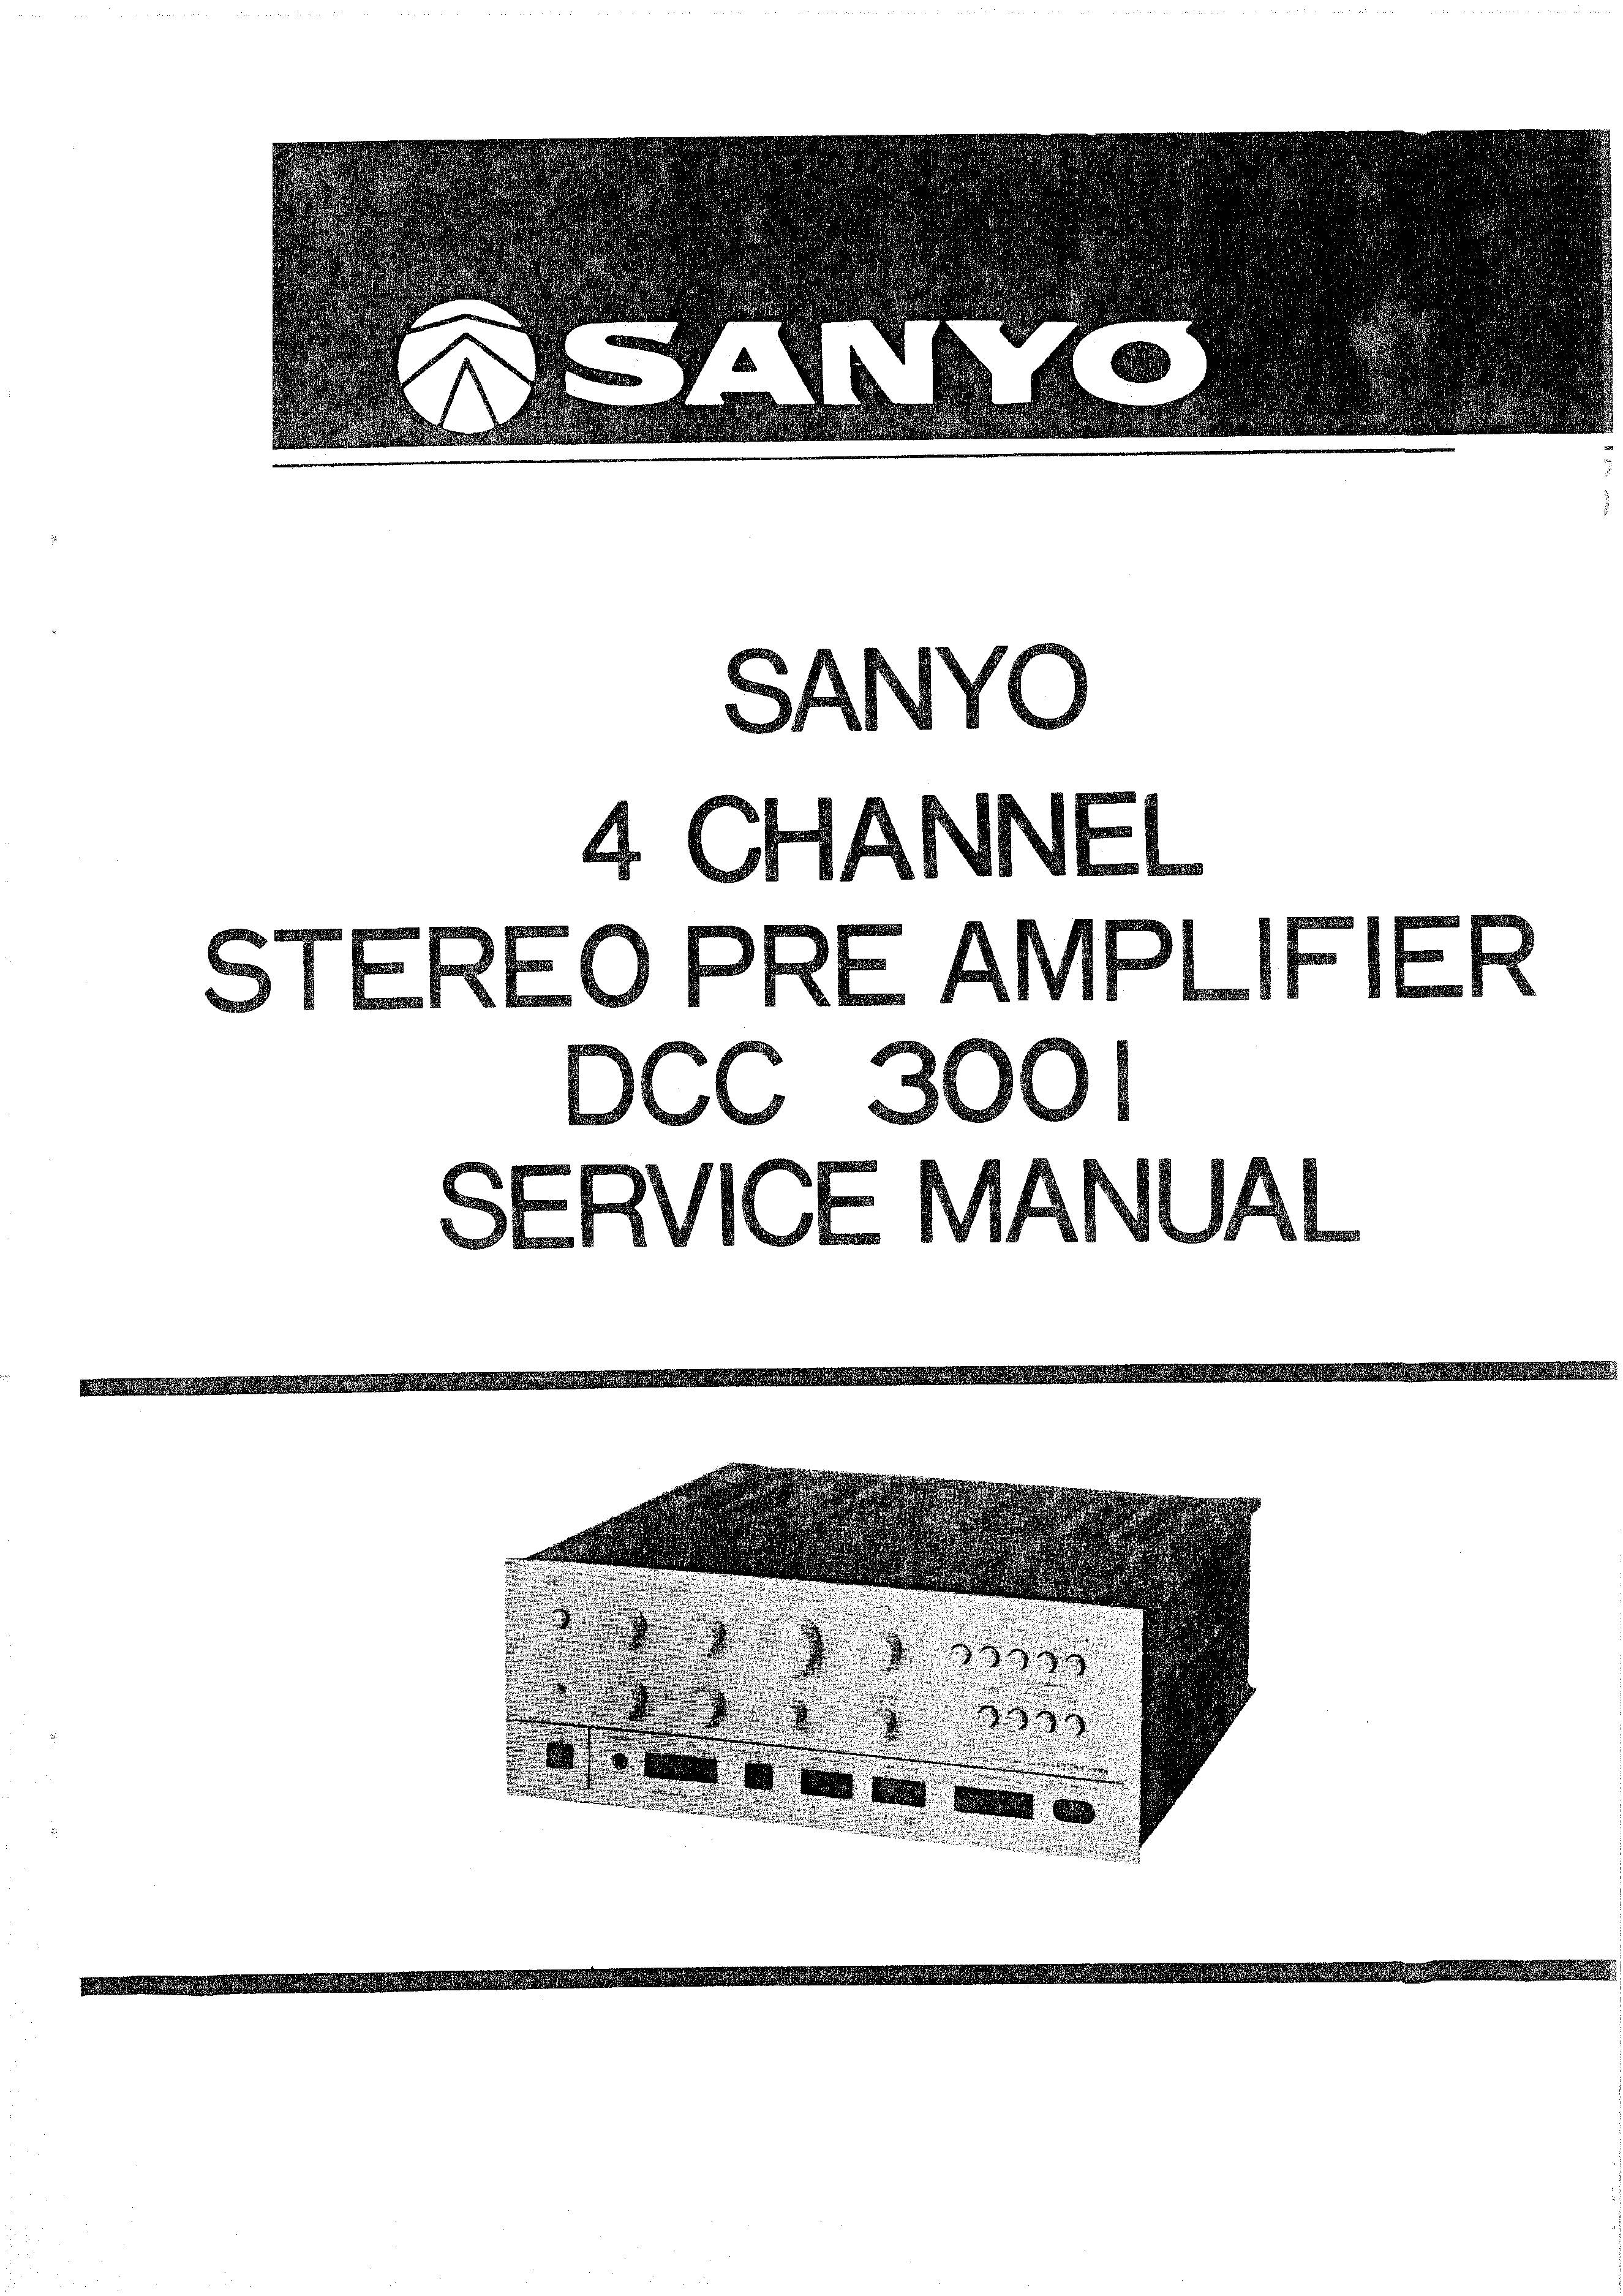 Sanyo DCC-3001